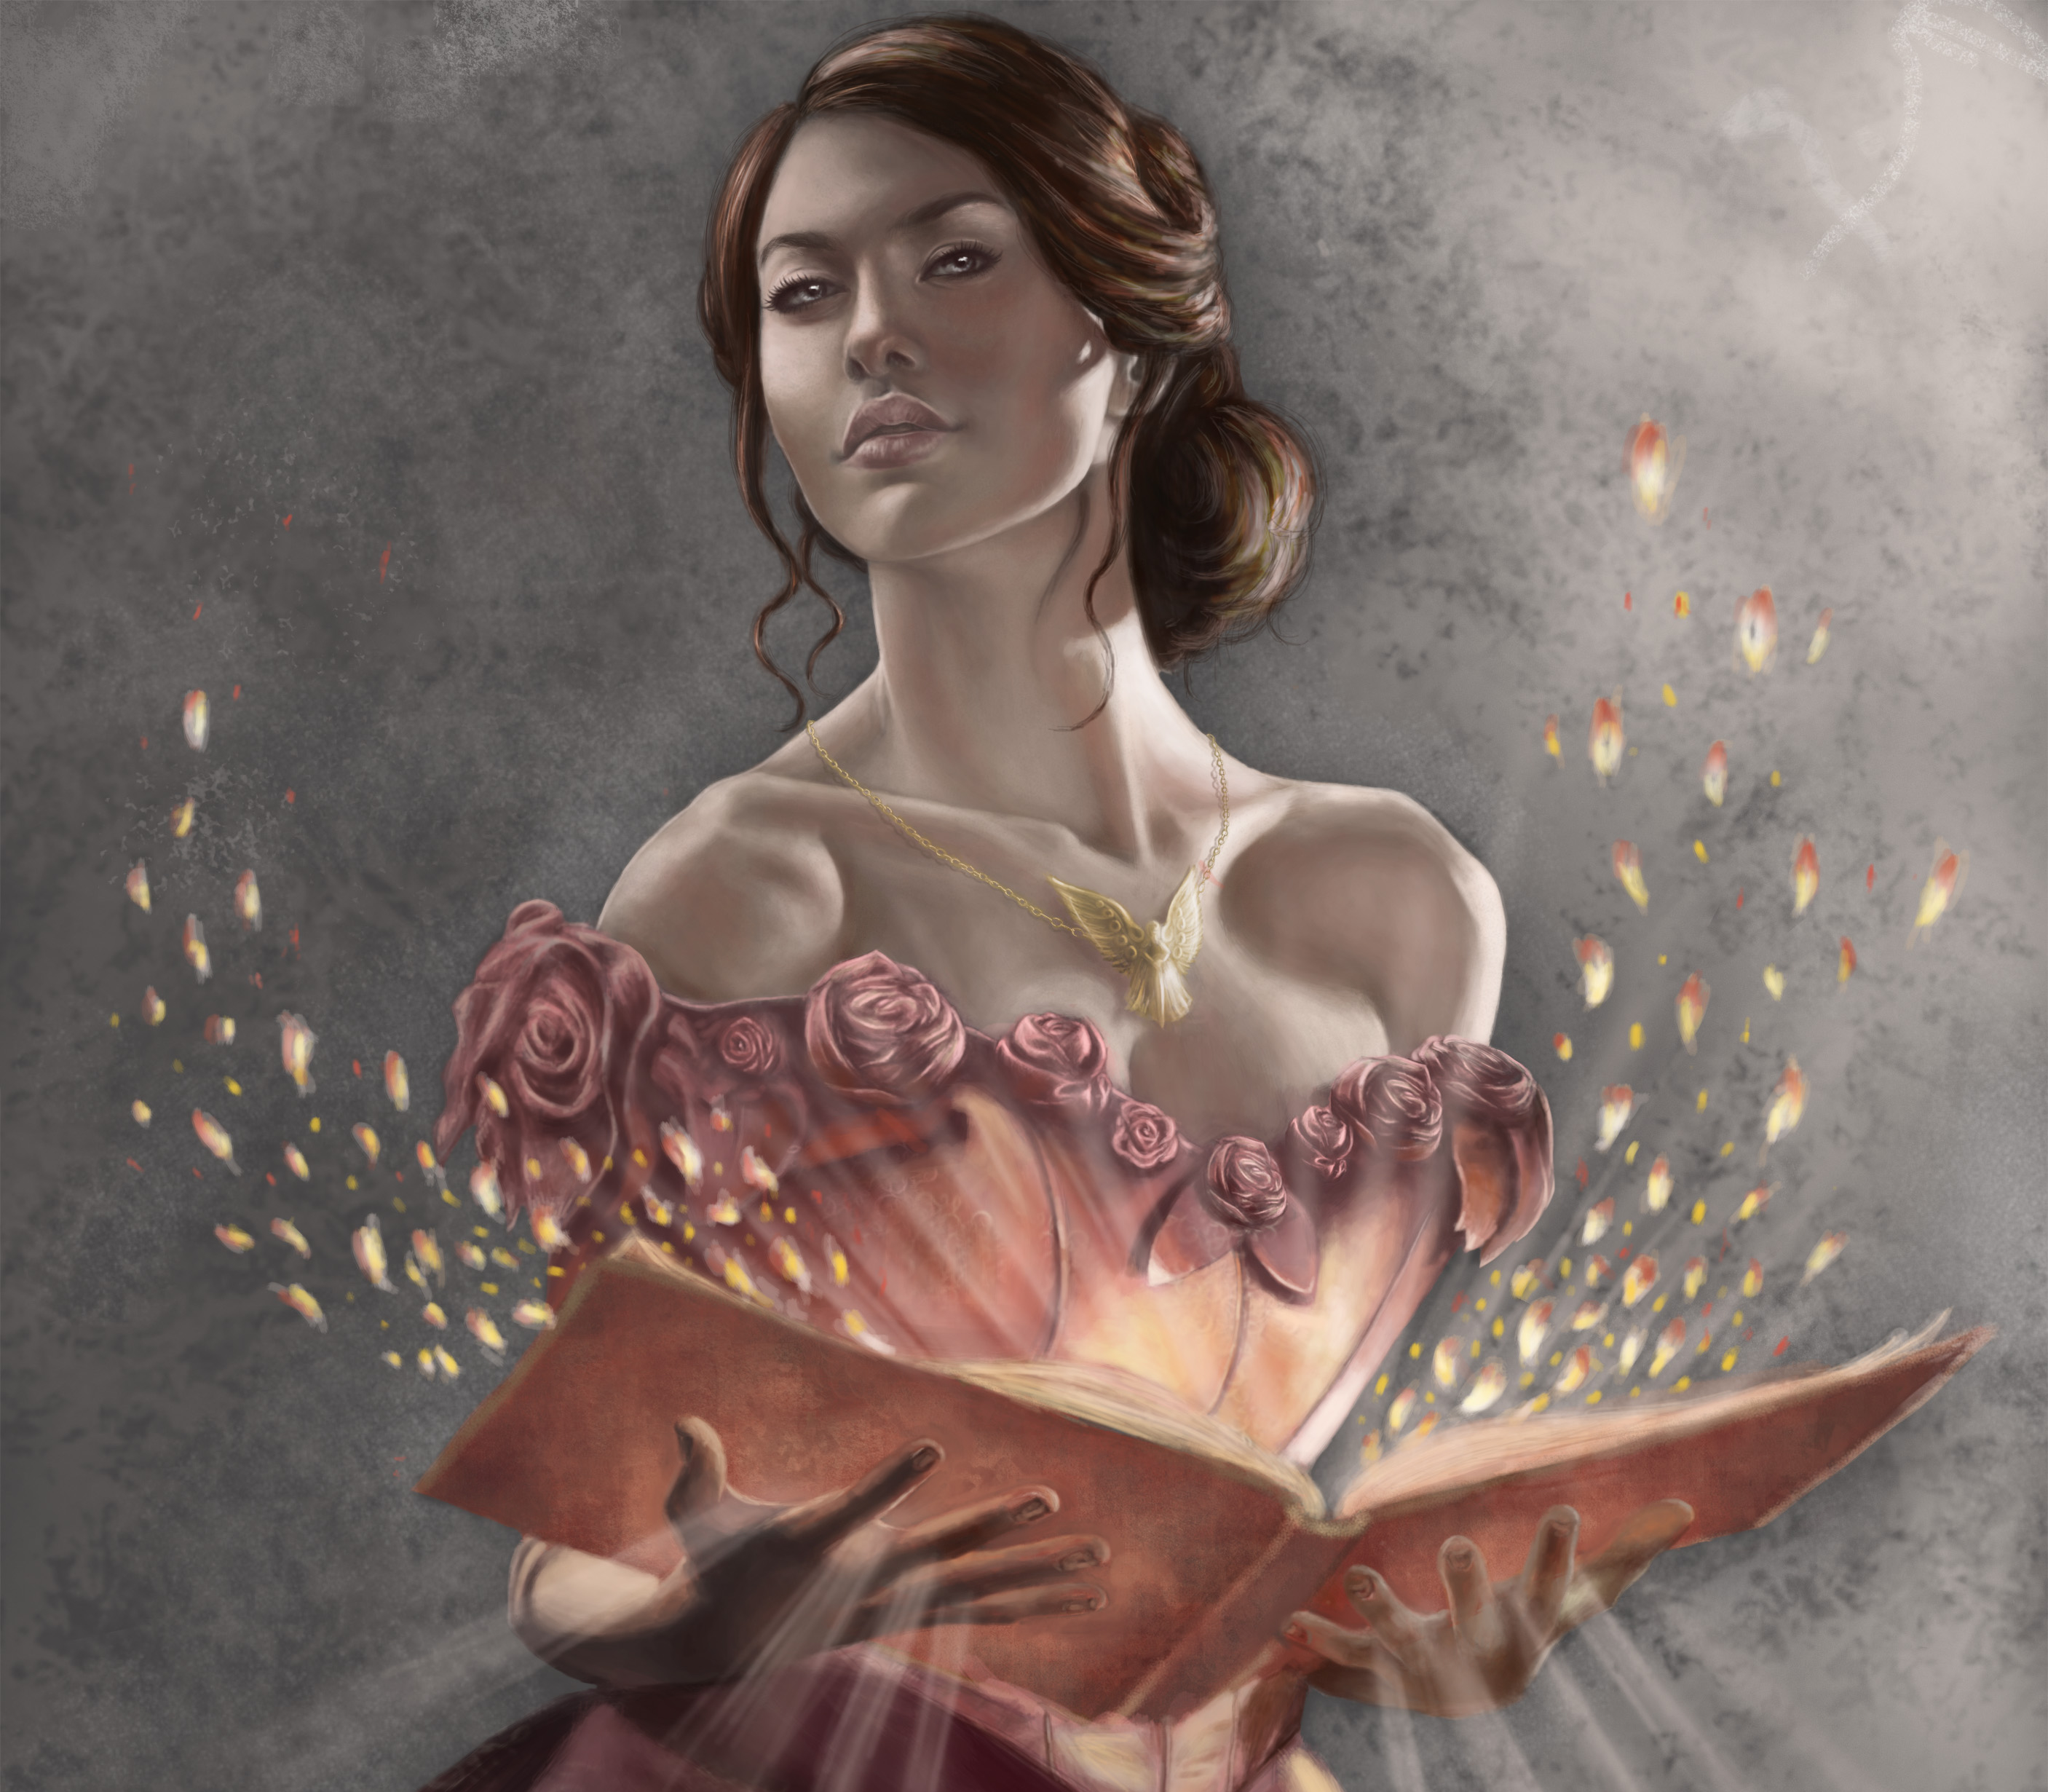 Book Dress Fantasy Girl Light Magic Pendant Rose Woman 2813x2461